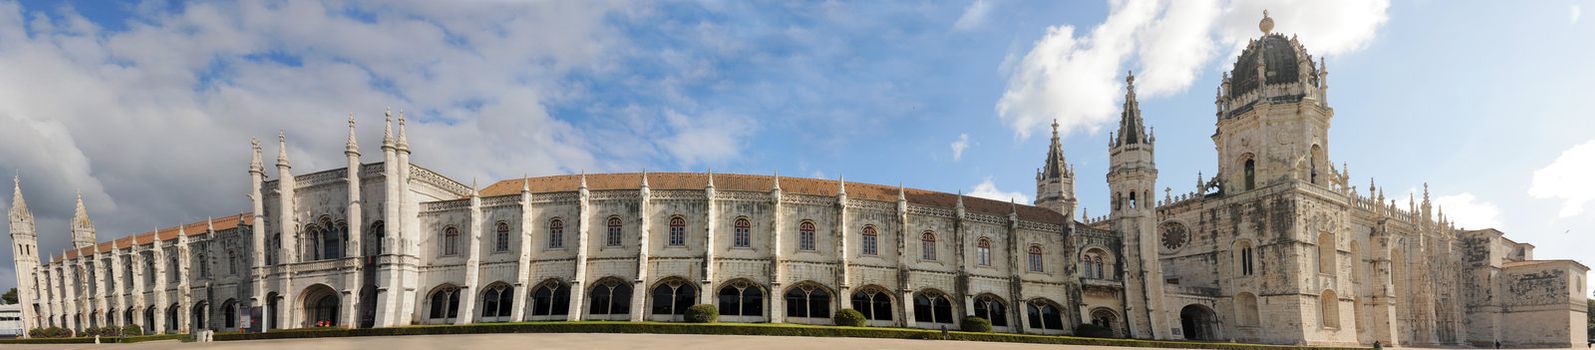 Mosteiro dos Jeronimos Cloister in Belem, Lisbon, Portugal